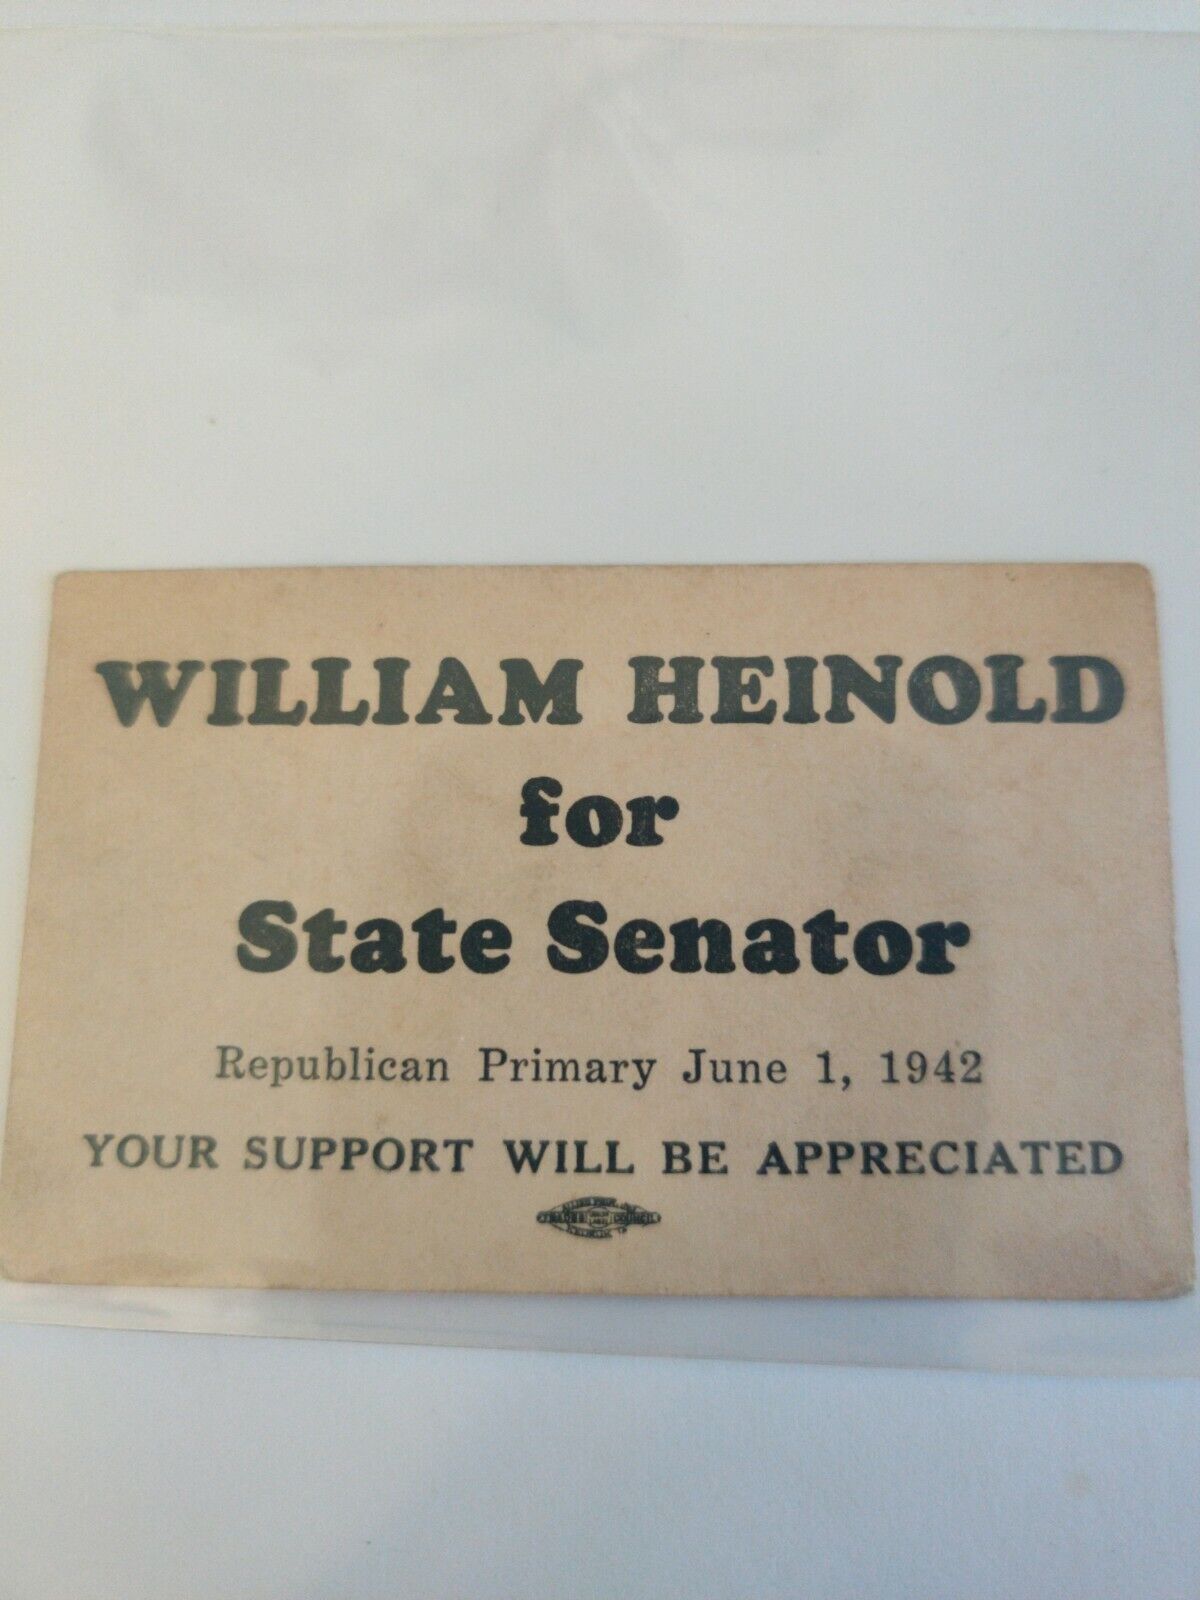 vintage business card william heinold for state senator june 1 1942